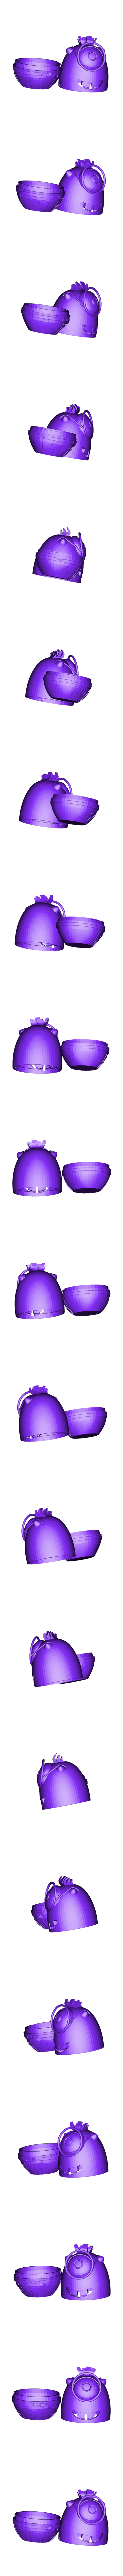 Son_eggs.STL Download free STL file La "Family Eggs" • 3D printable template, Makershop